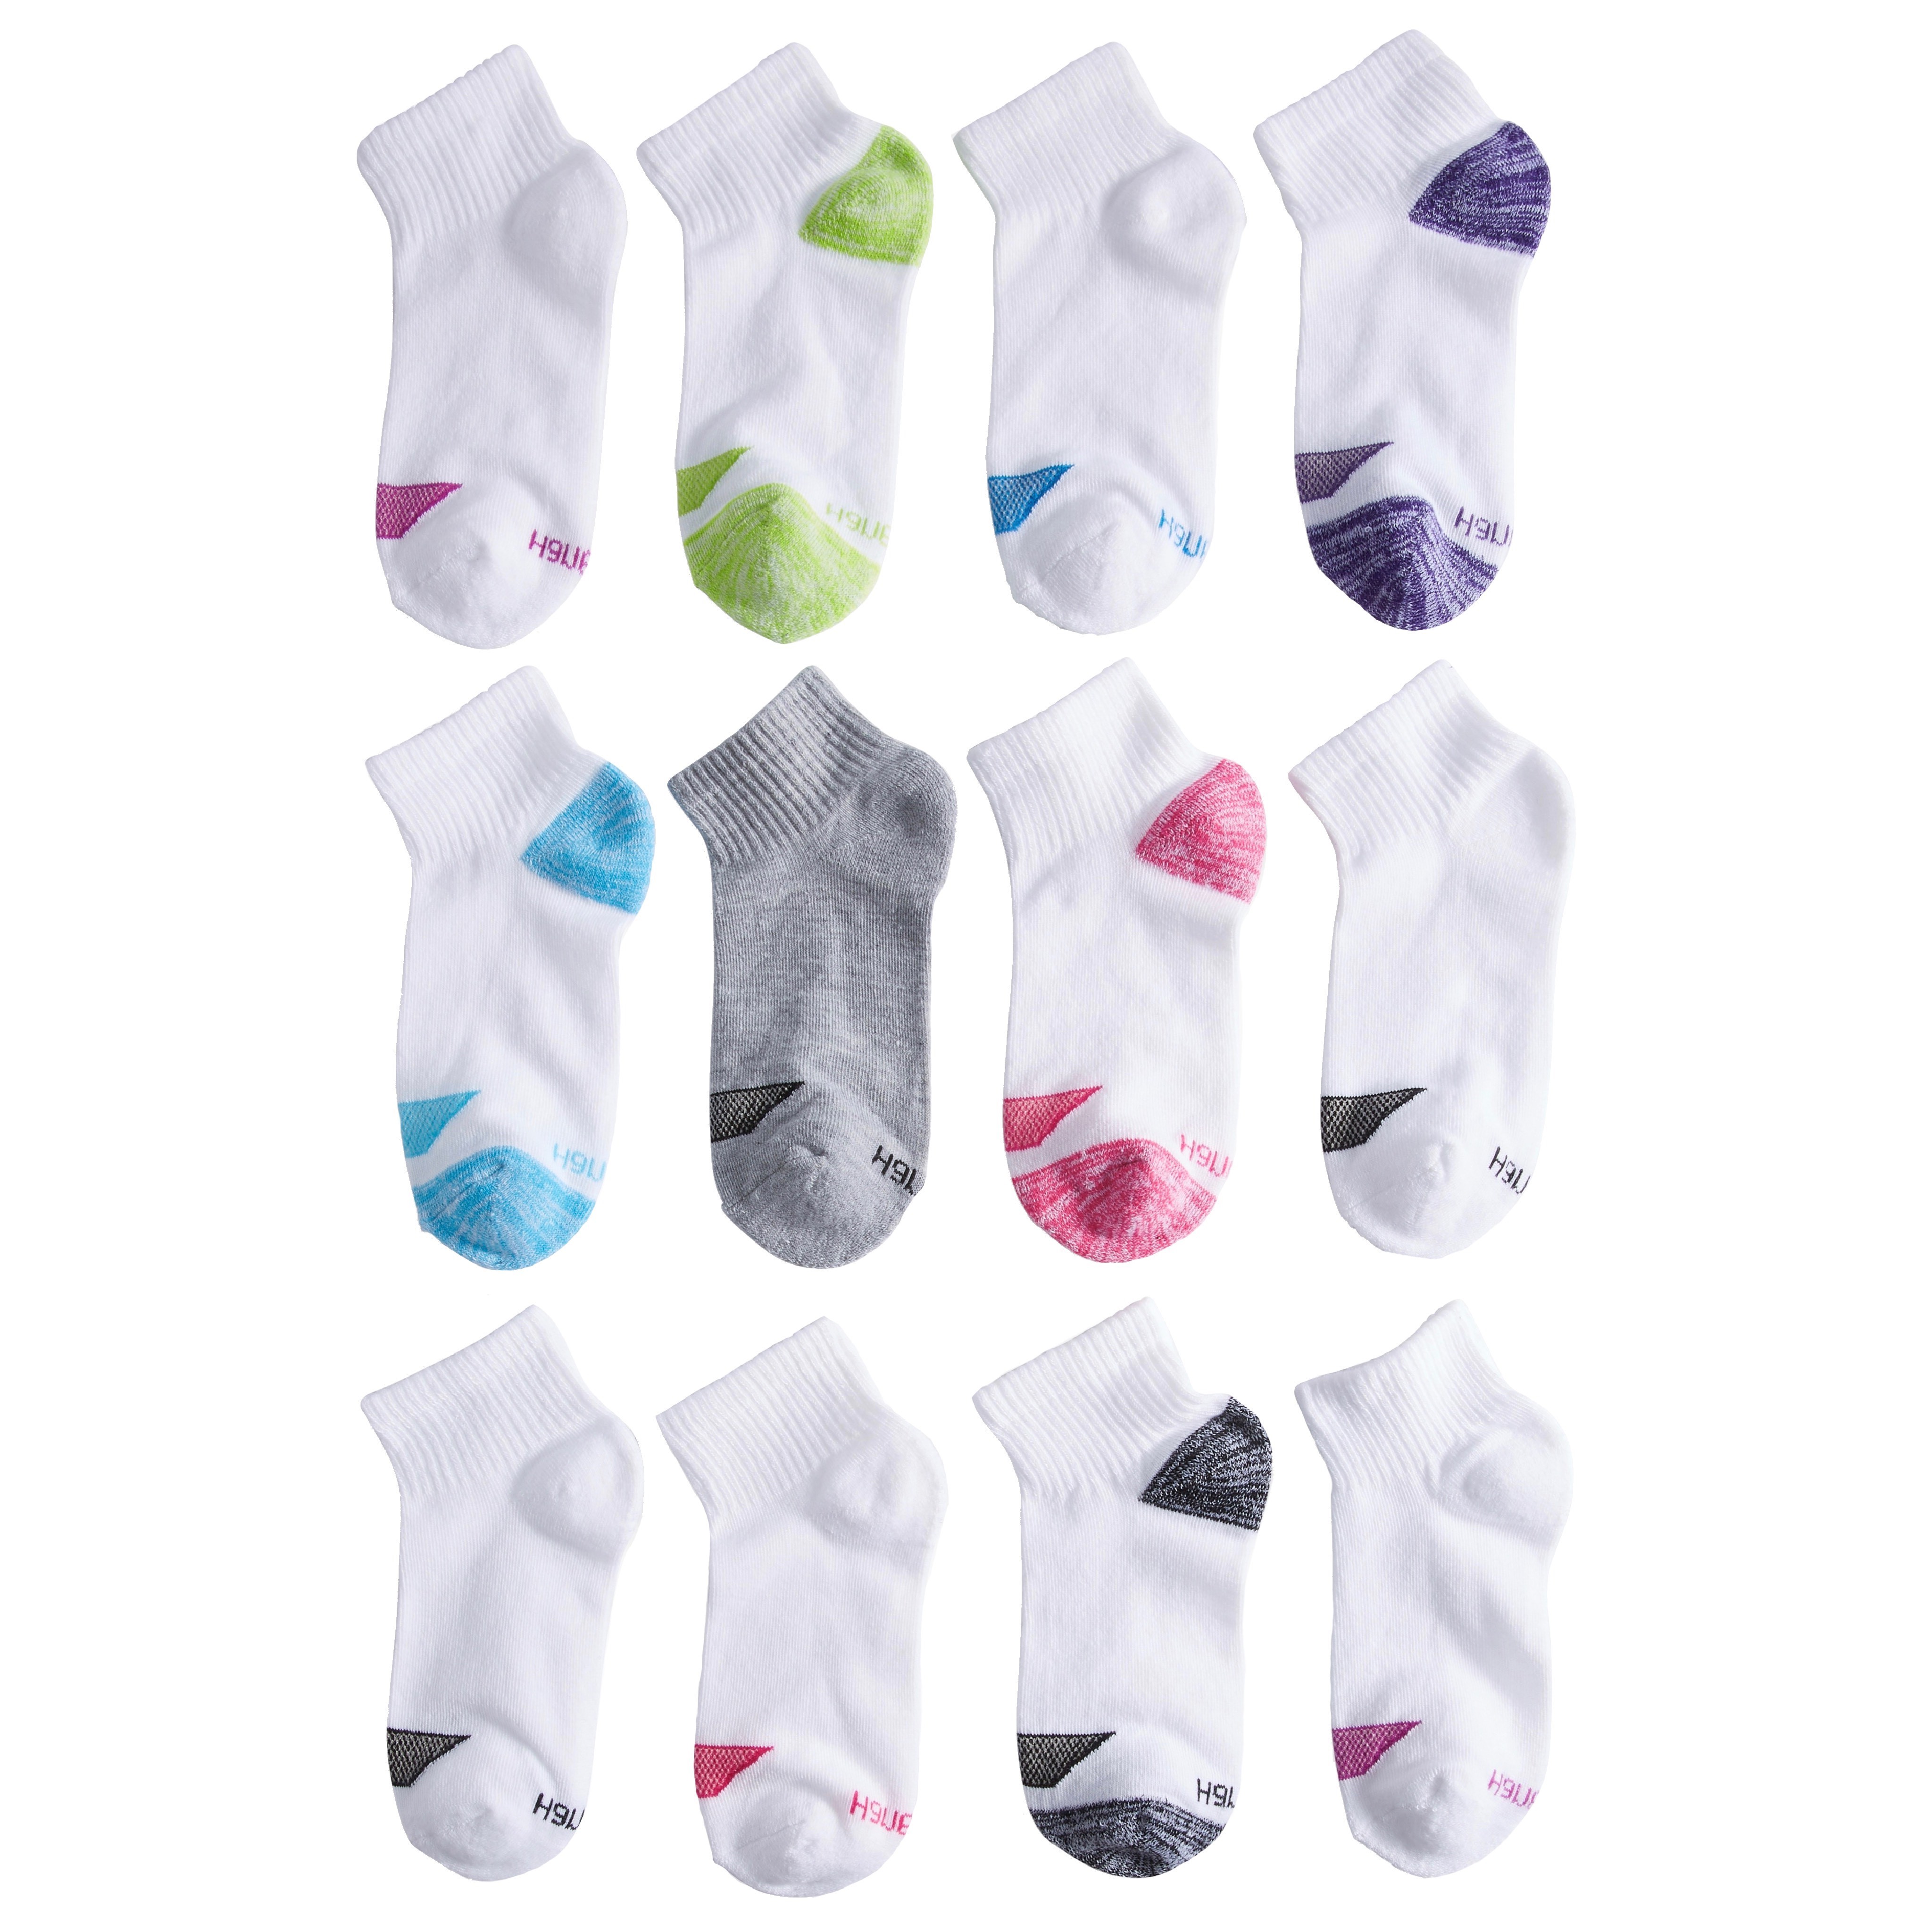 Hanes Girls' Ankle Cool Comfort Socks, 12 Pack - image 1 of 4